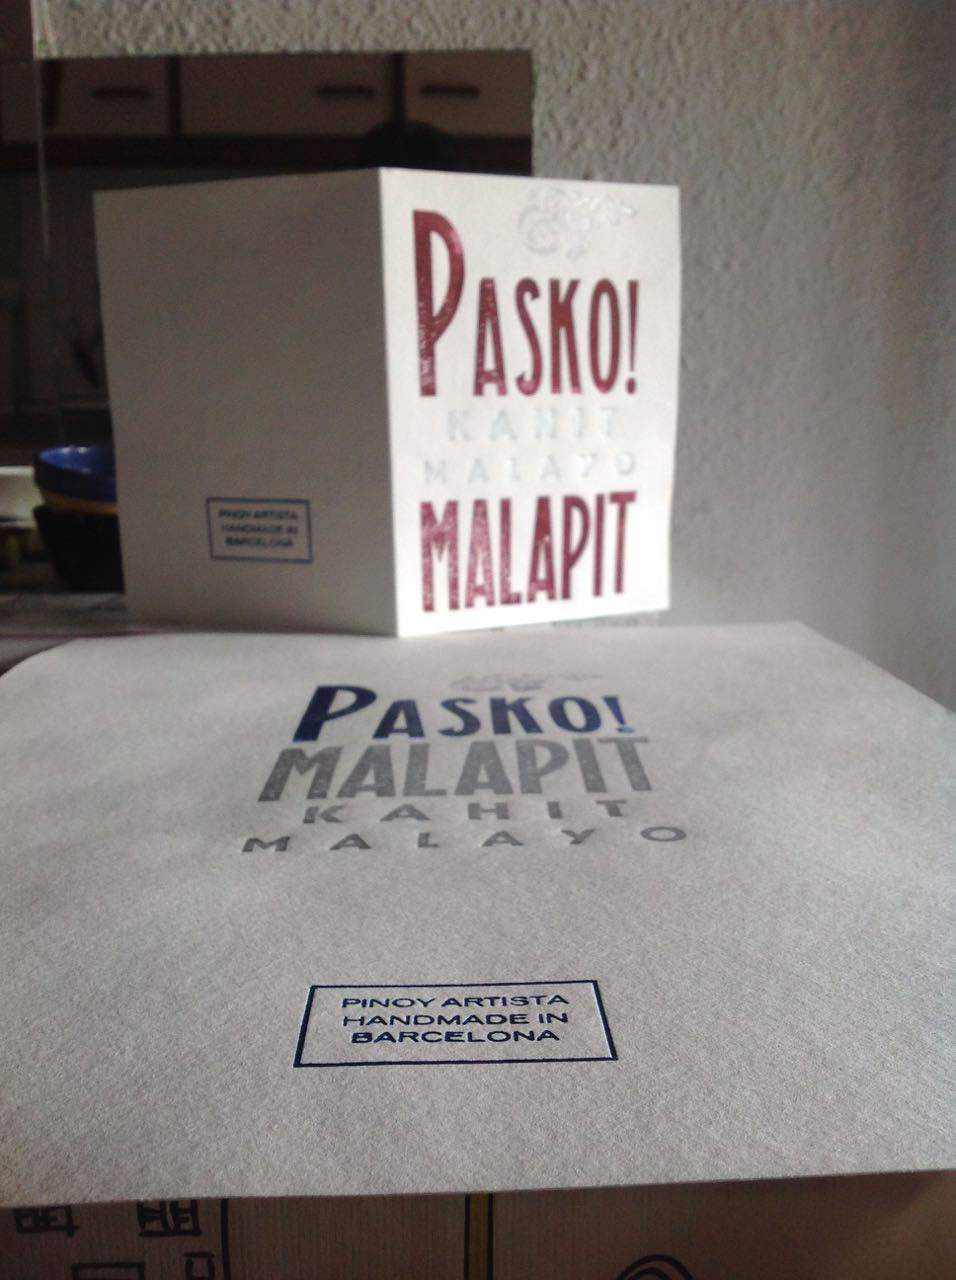 pinoyartista handmade in barcelona jose gamboa pasko Business Cards pinoy artista letterpress typesetting